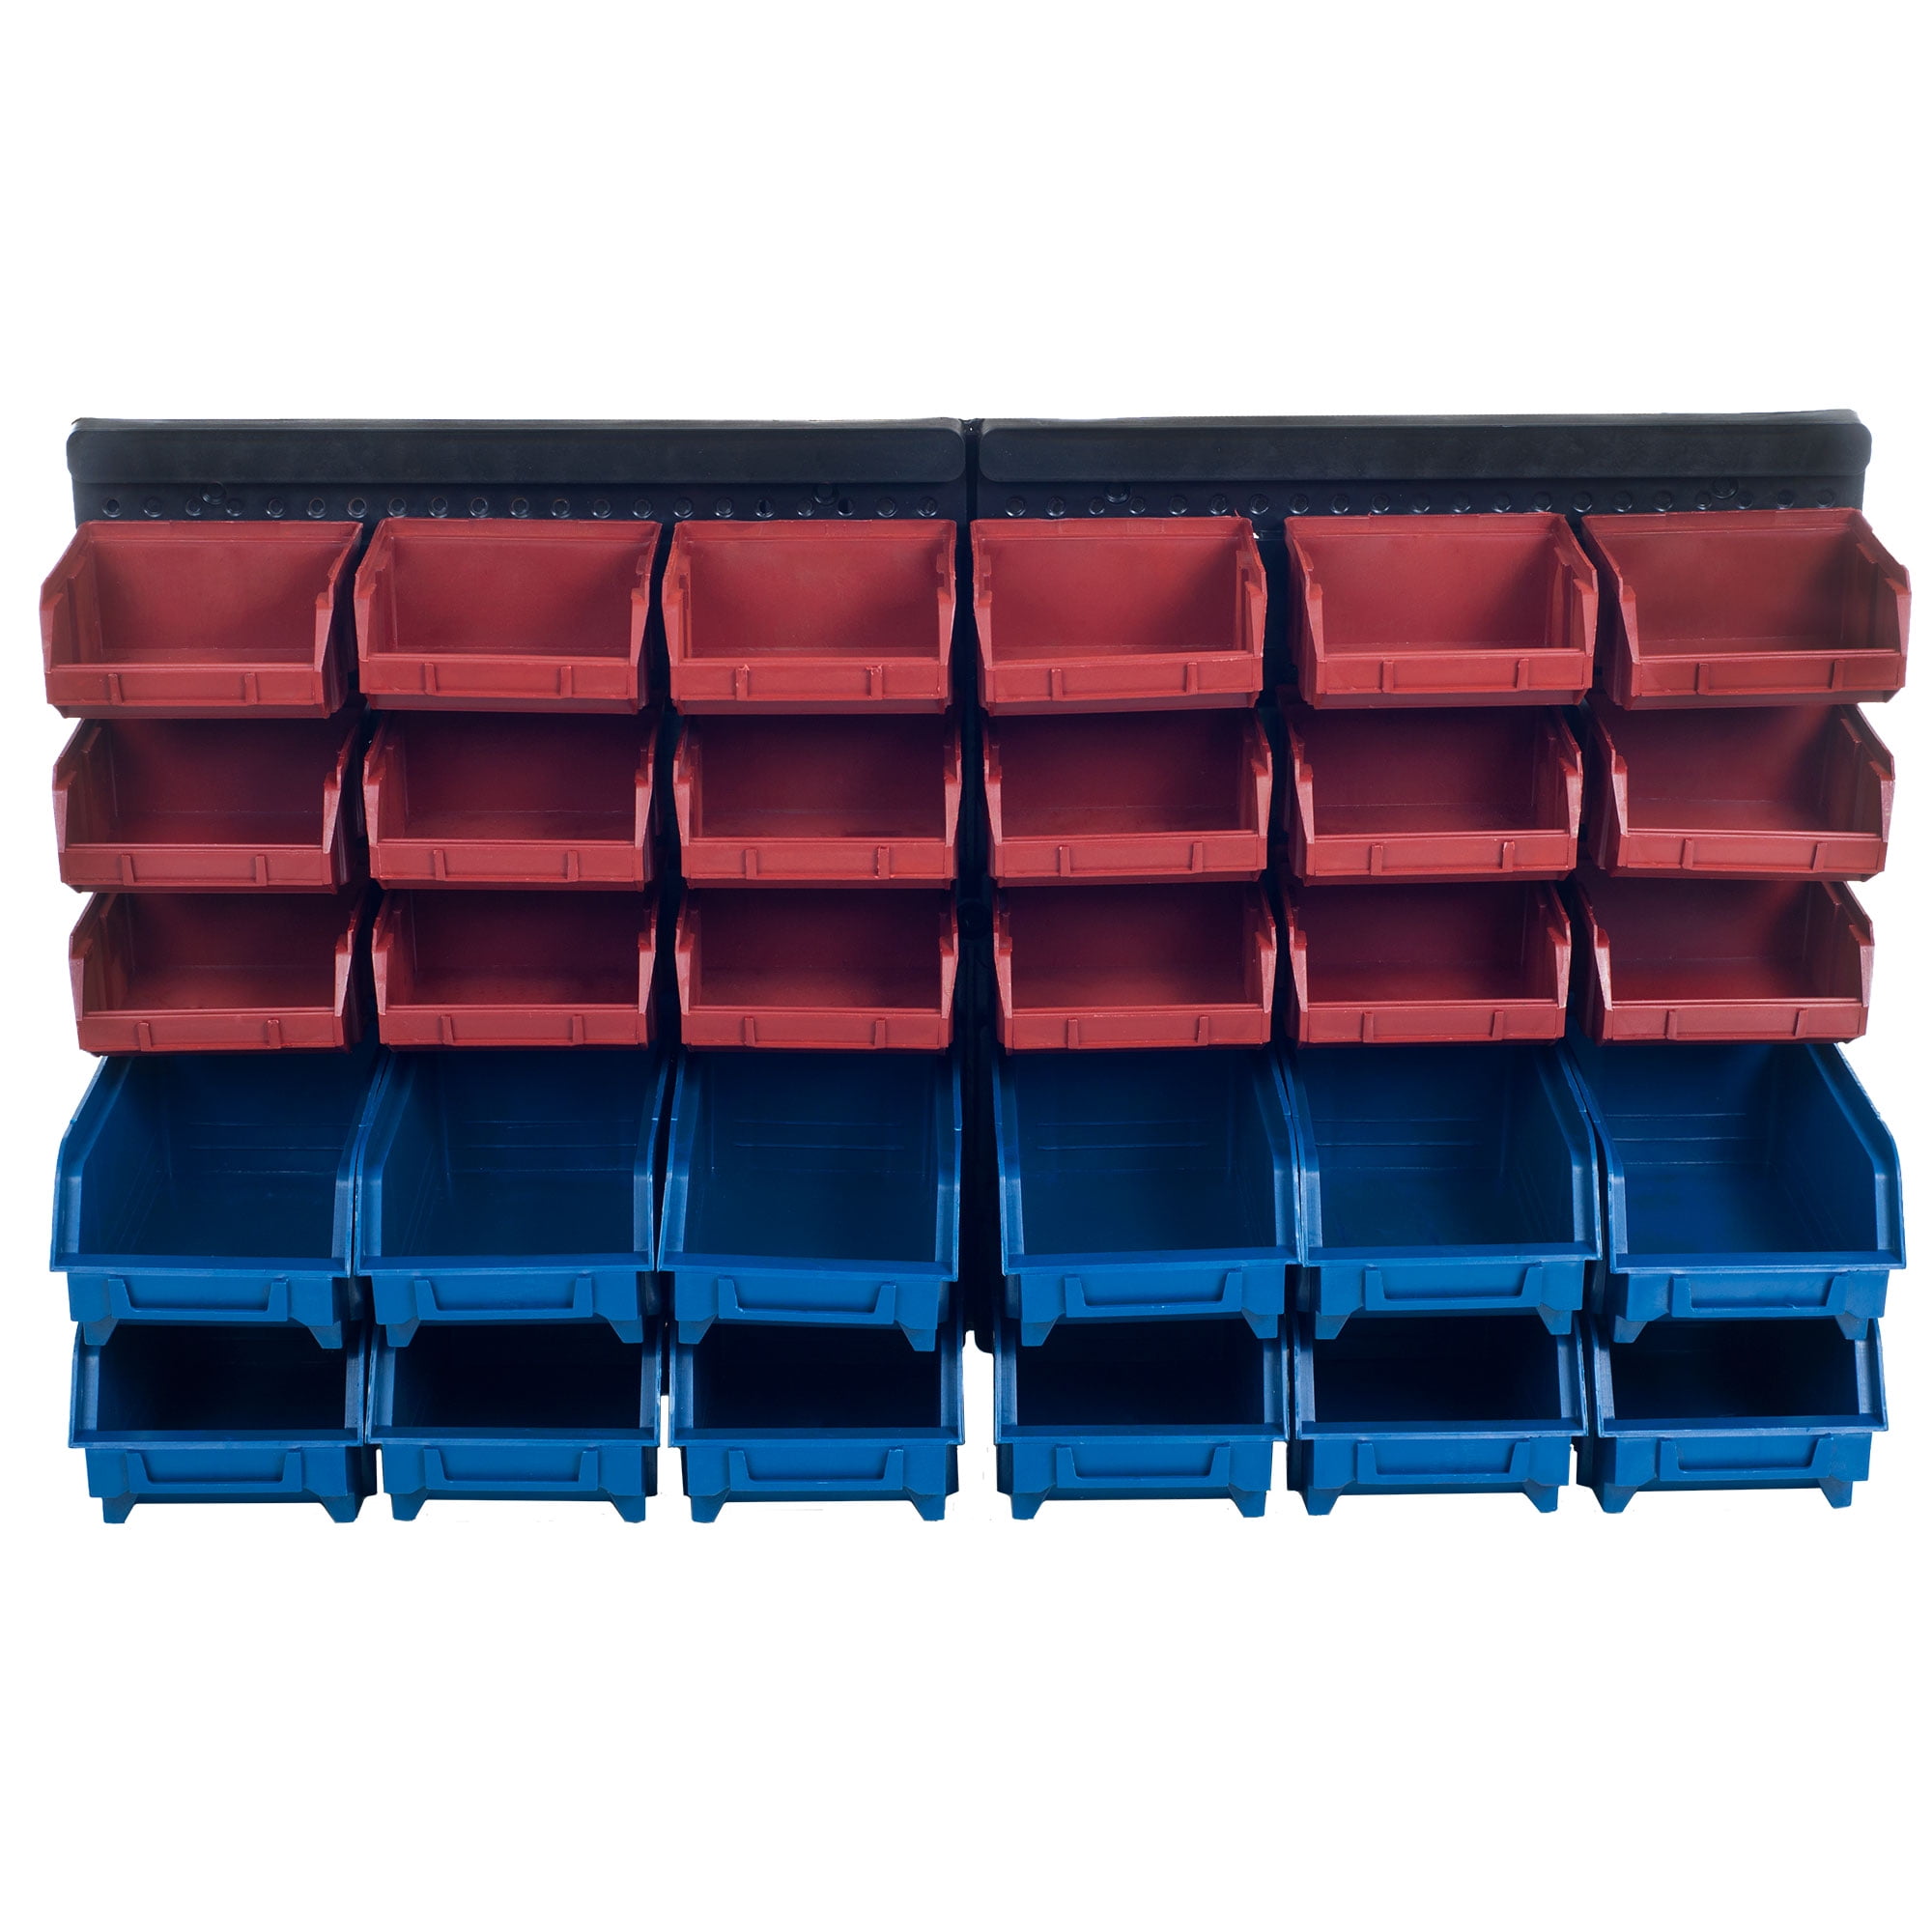 Wall-Mounted Garage Storage Bins - 30-Compartment Garage Organization,  Craft Storage, Tool Box Organizer Unit (Black/Red/Blue) by Stalwart